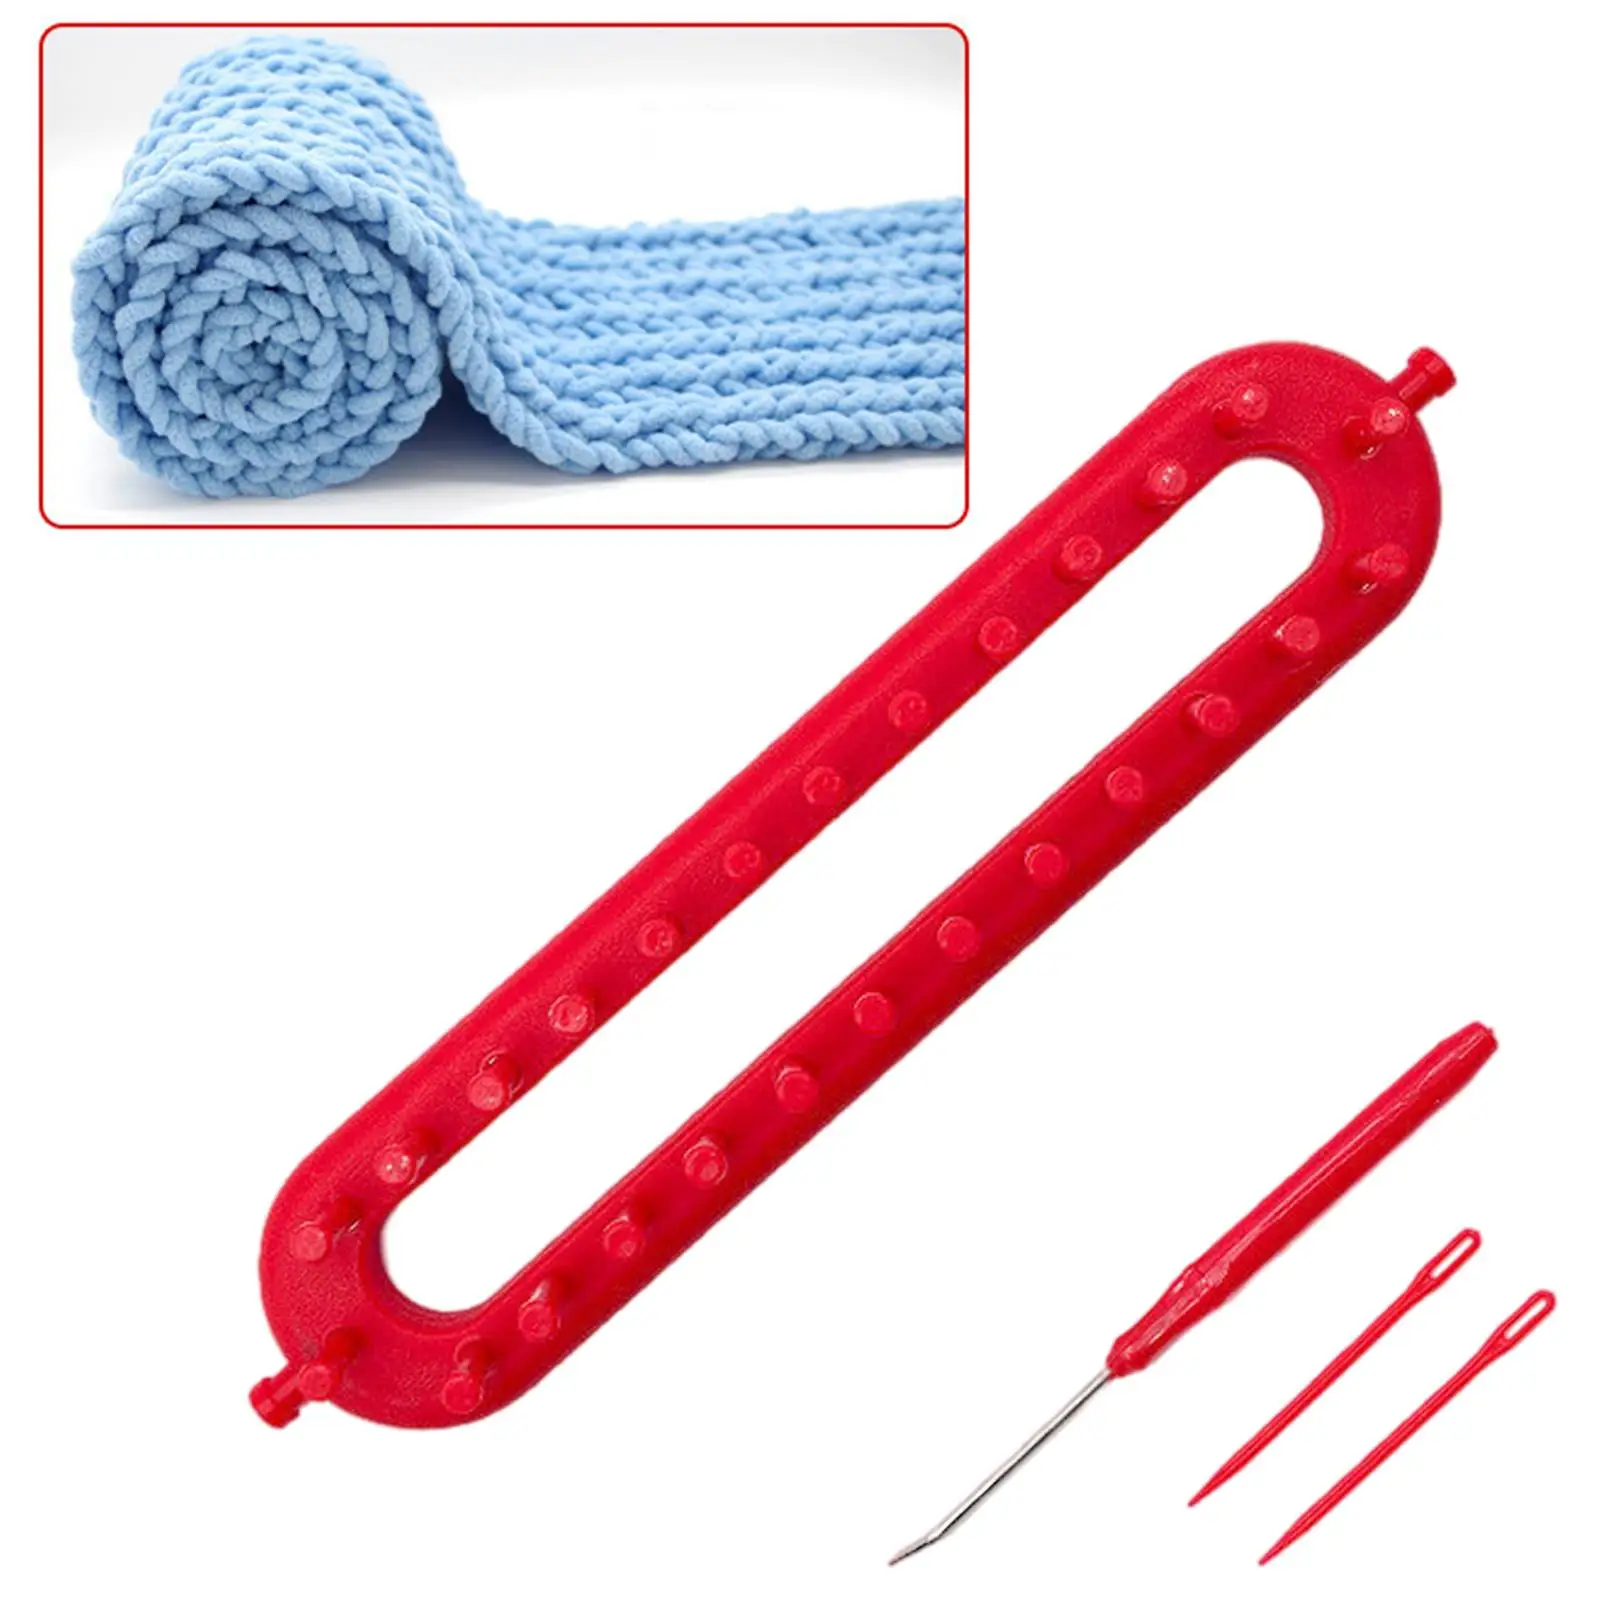 Plastic Knitting Loom Kit Sewing Tools DIY Crochet Weaving Handmade Machine Needle Knitter for Beginners Shawl Blankets